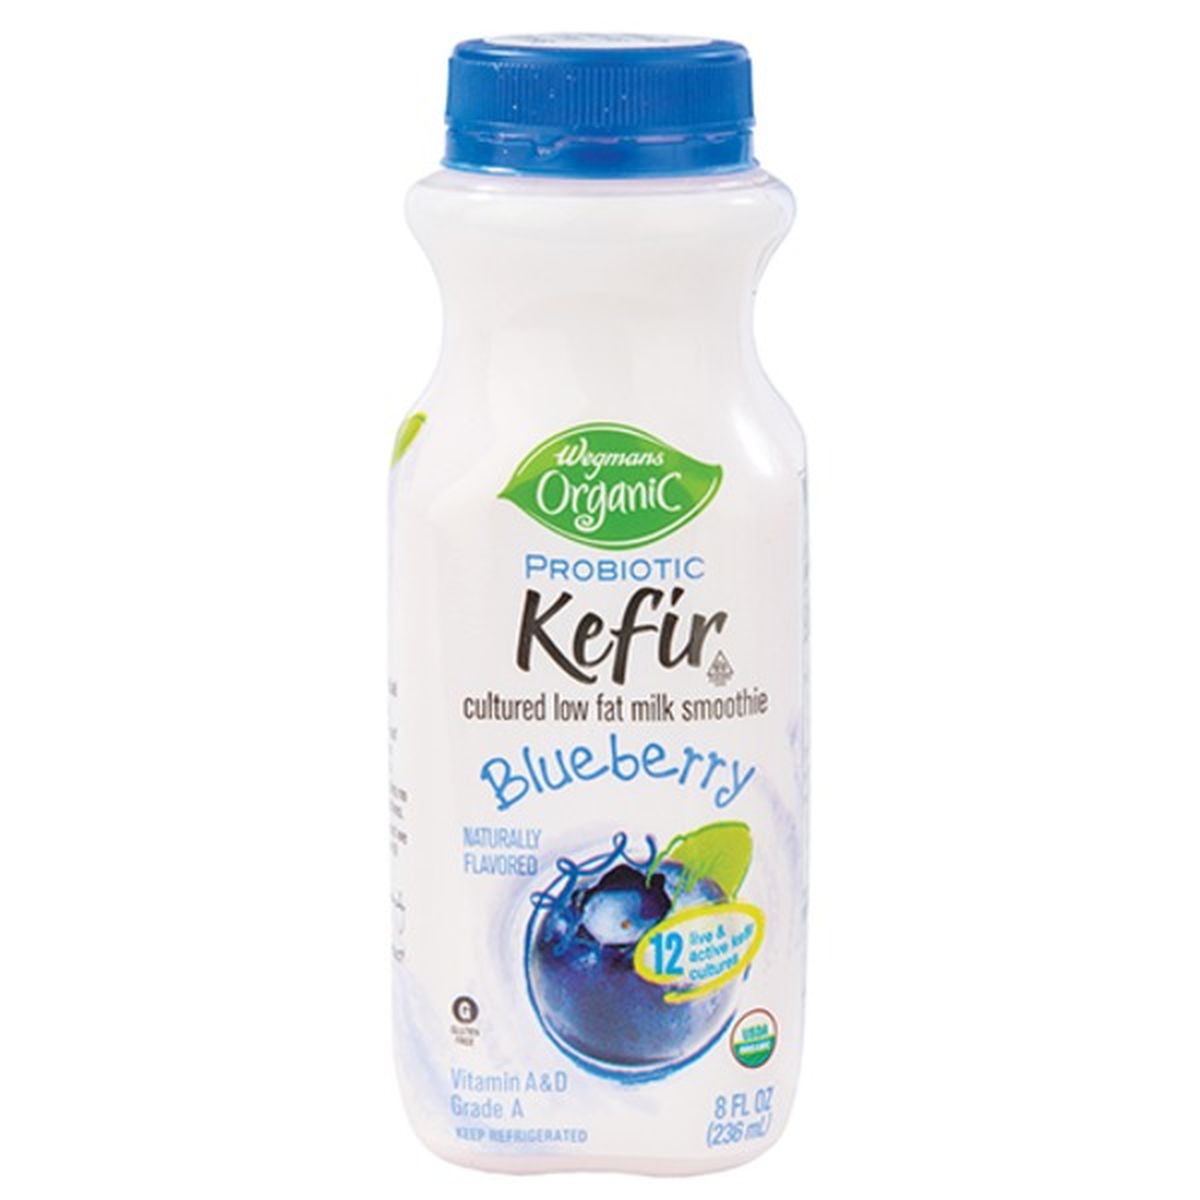 Calories in Wegmans Organic Blueberry Probiotic Kefir